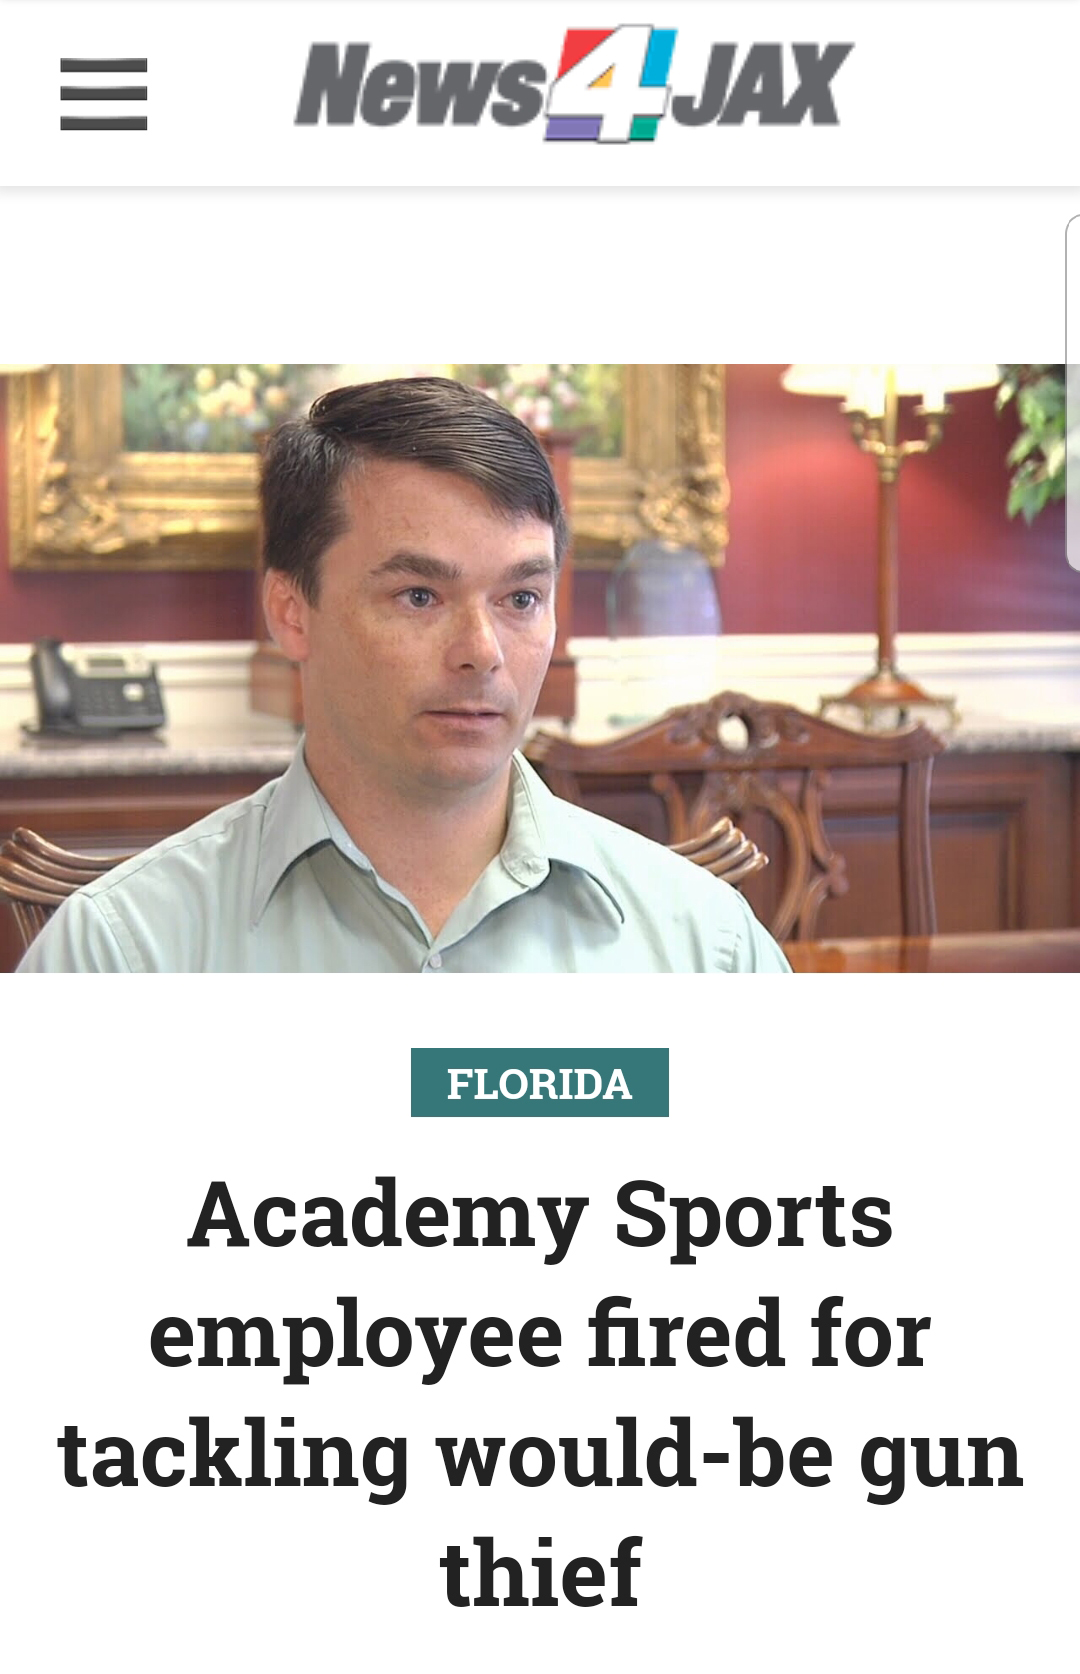 photo caption - News4 Jax Florida Academy Sports employee fired for tackling wouldbe gun thief